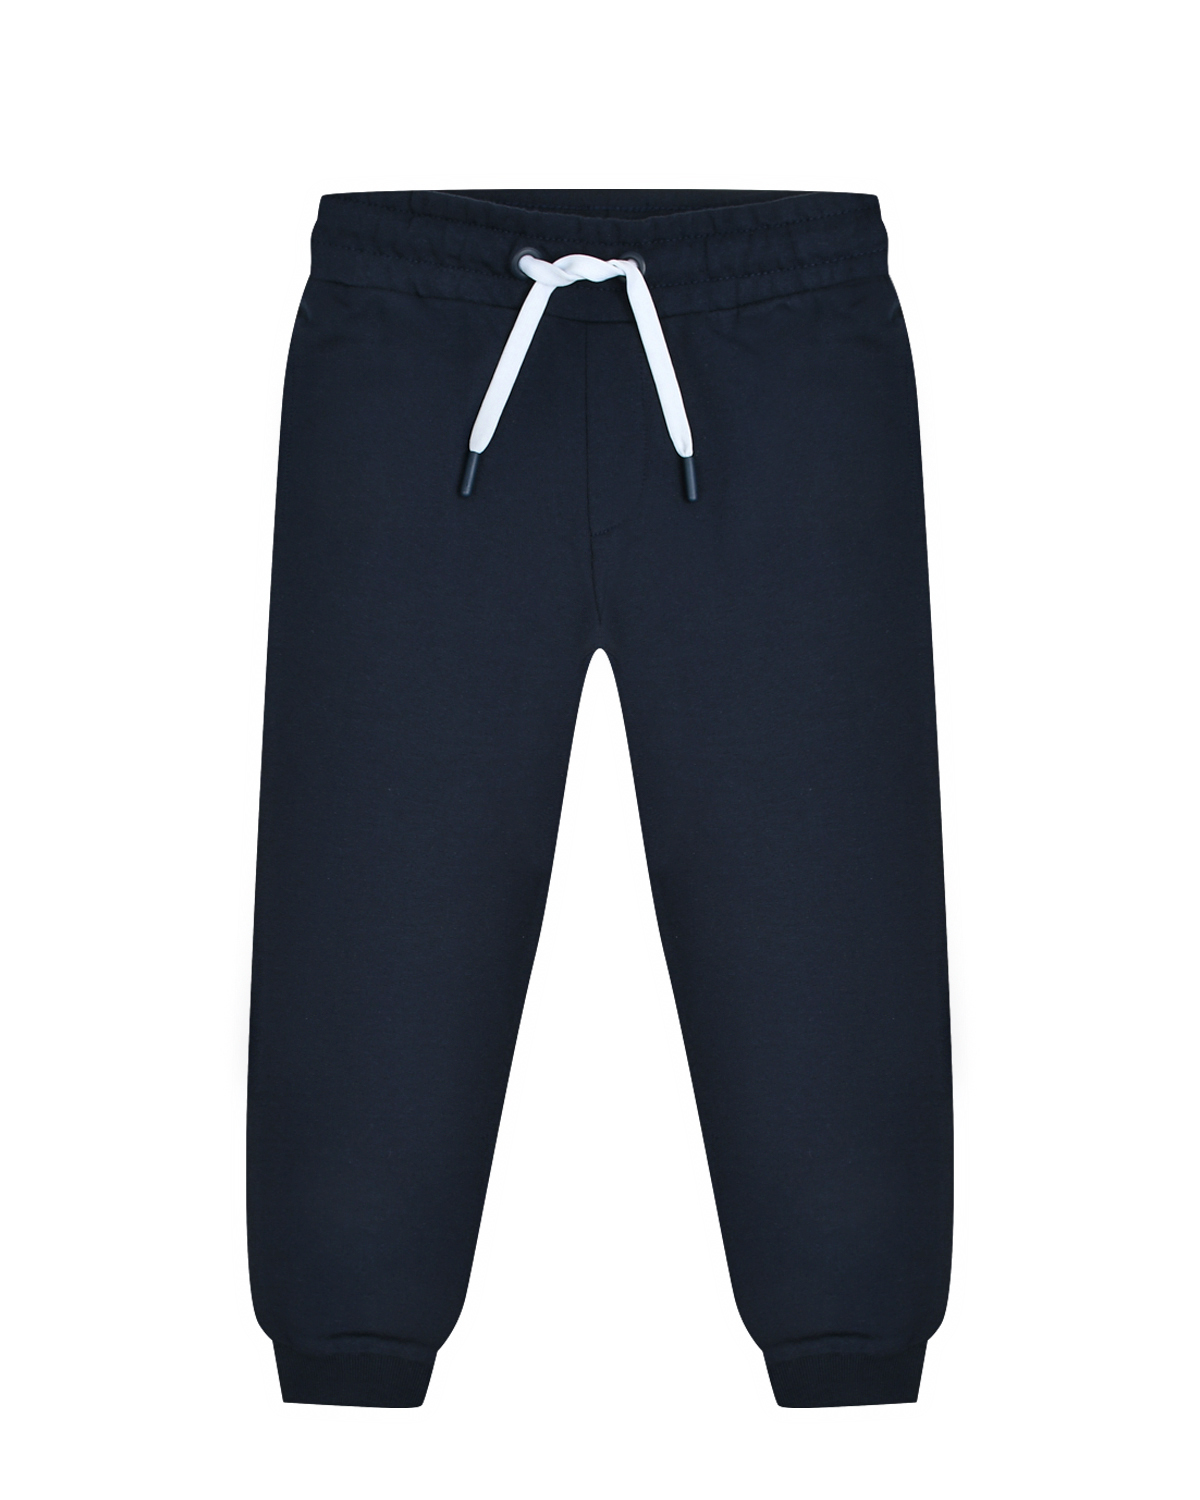 Спортивные брюки с поясом на кулиске Bikkembergs, размер 116, цвет синий